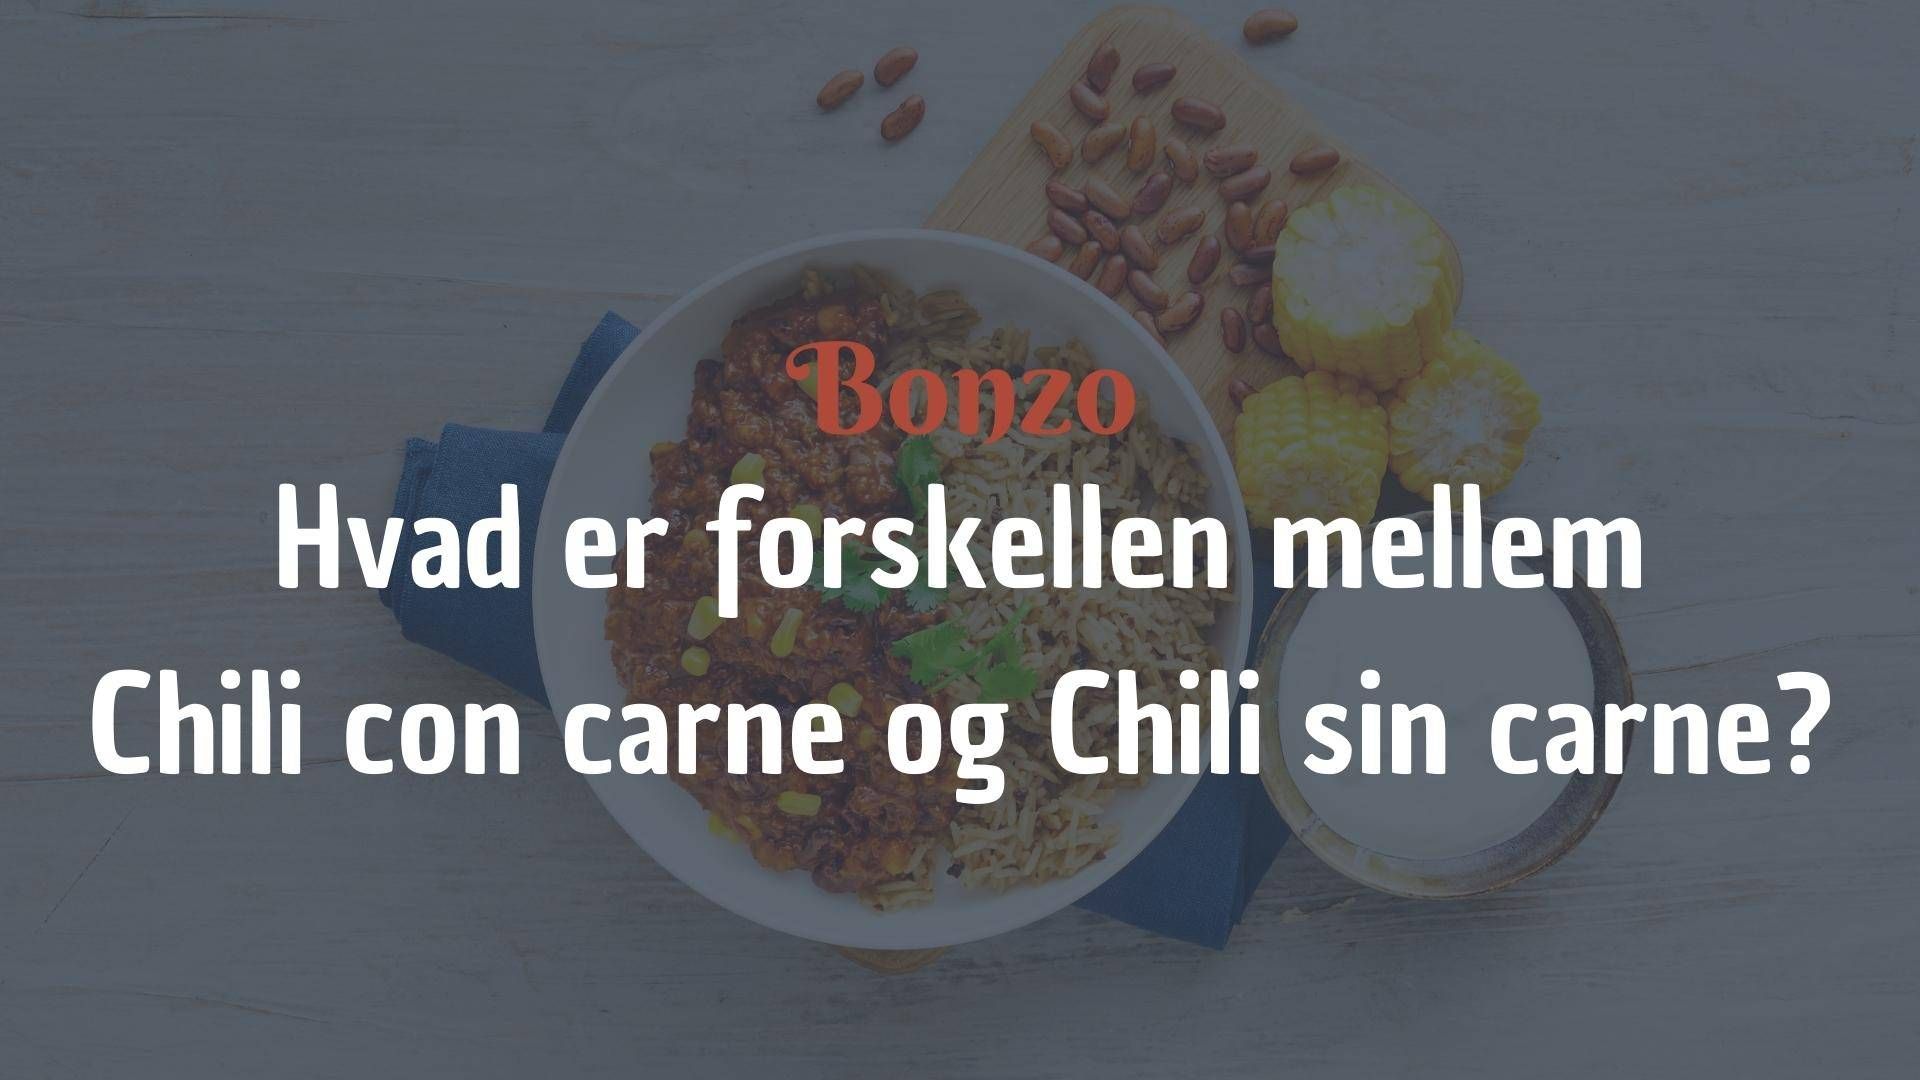 chili con carne chili sin carne forskel fastfood takeaway bonzo færdigretter færdigmad aftensmad bonzo